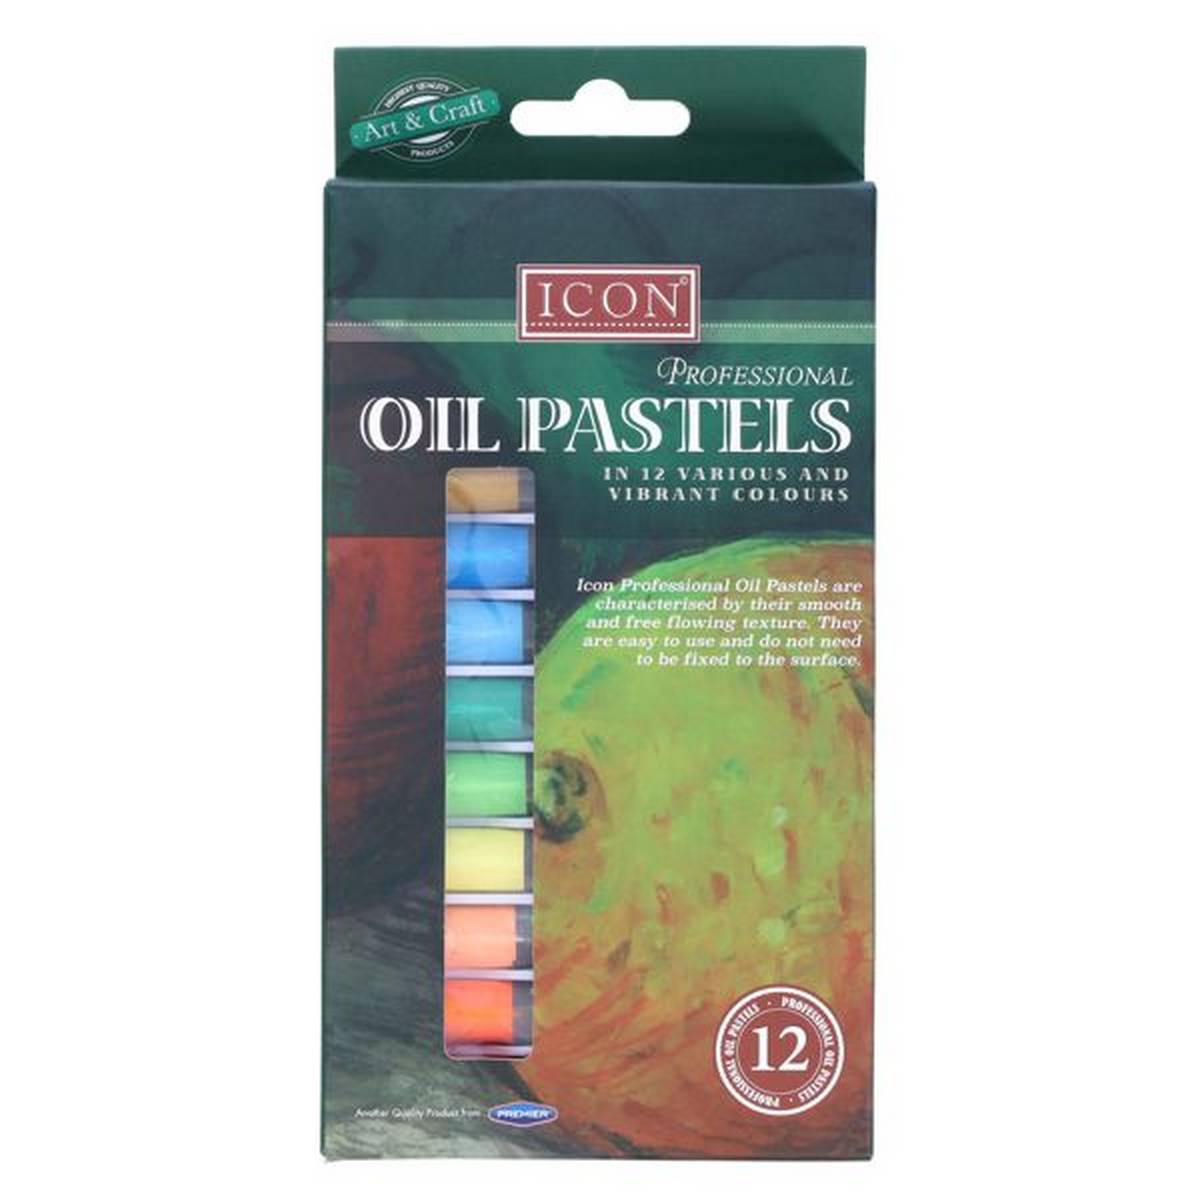 Box 12 Professional Oil Pastels